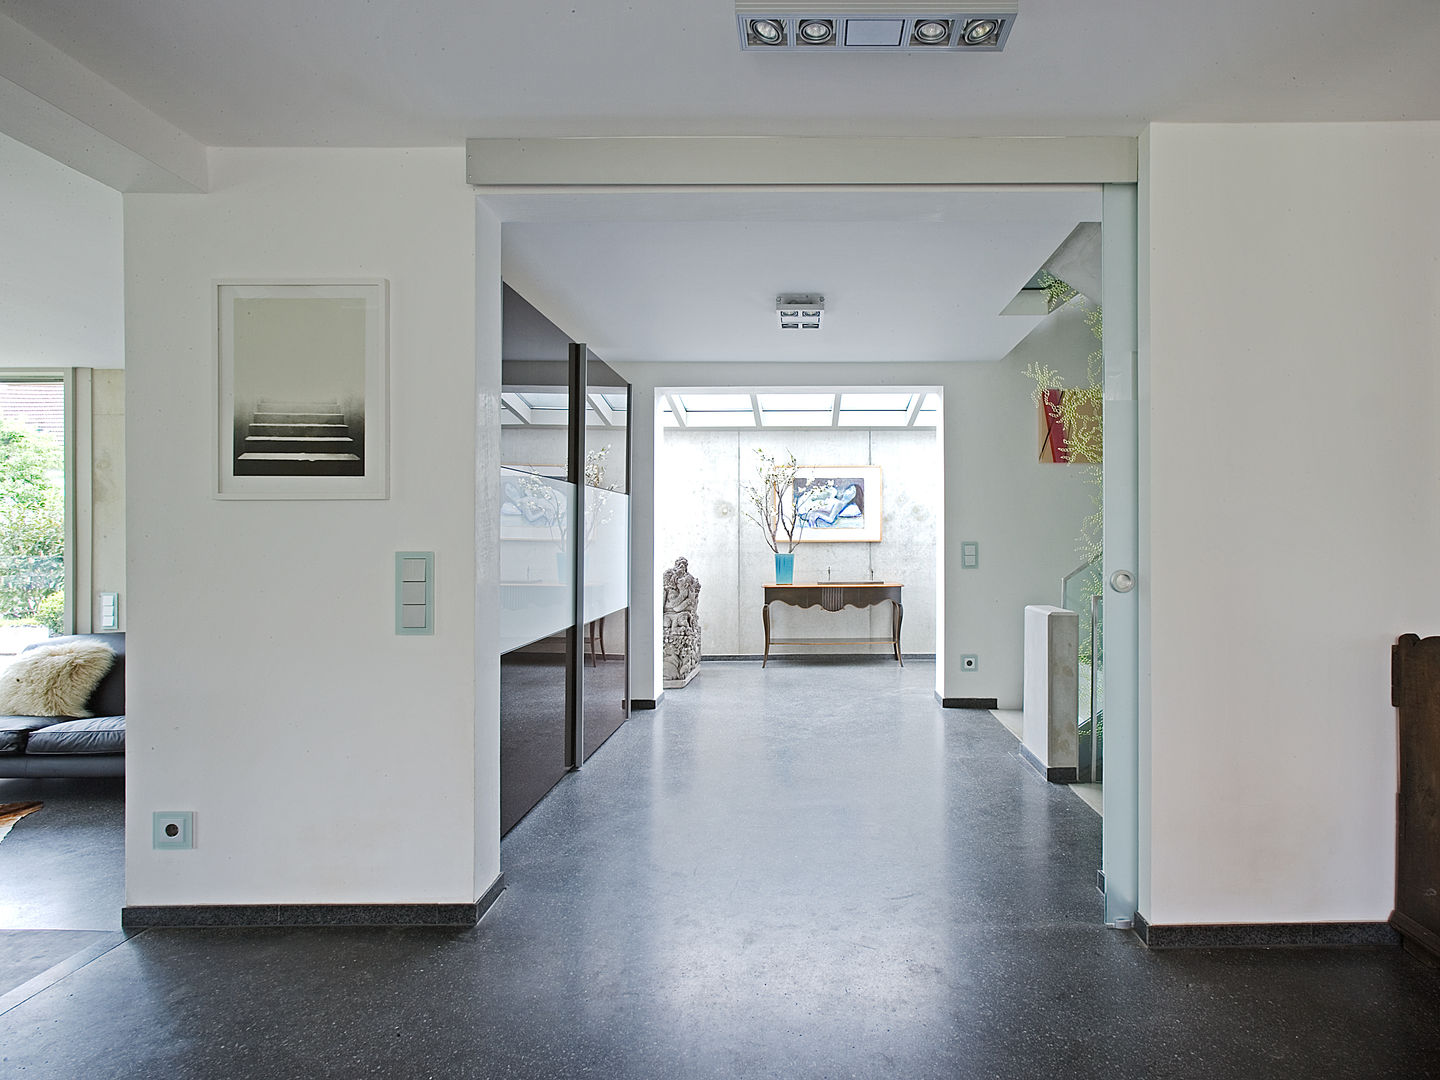 Wohnhaus M1 in Bad Boll , Gaus Architekten Gaus Architekten Pasillos, vestíbulos y escaleras de estilo moderno